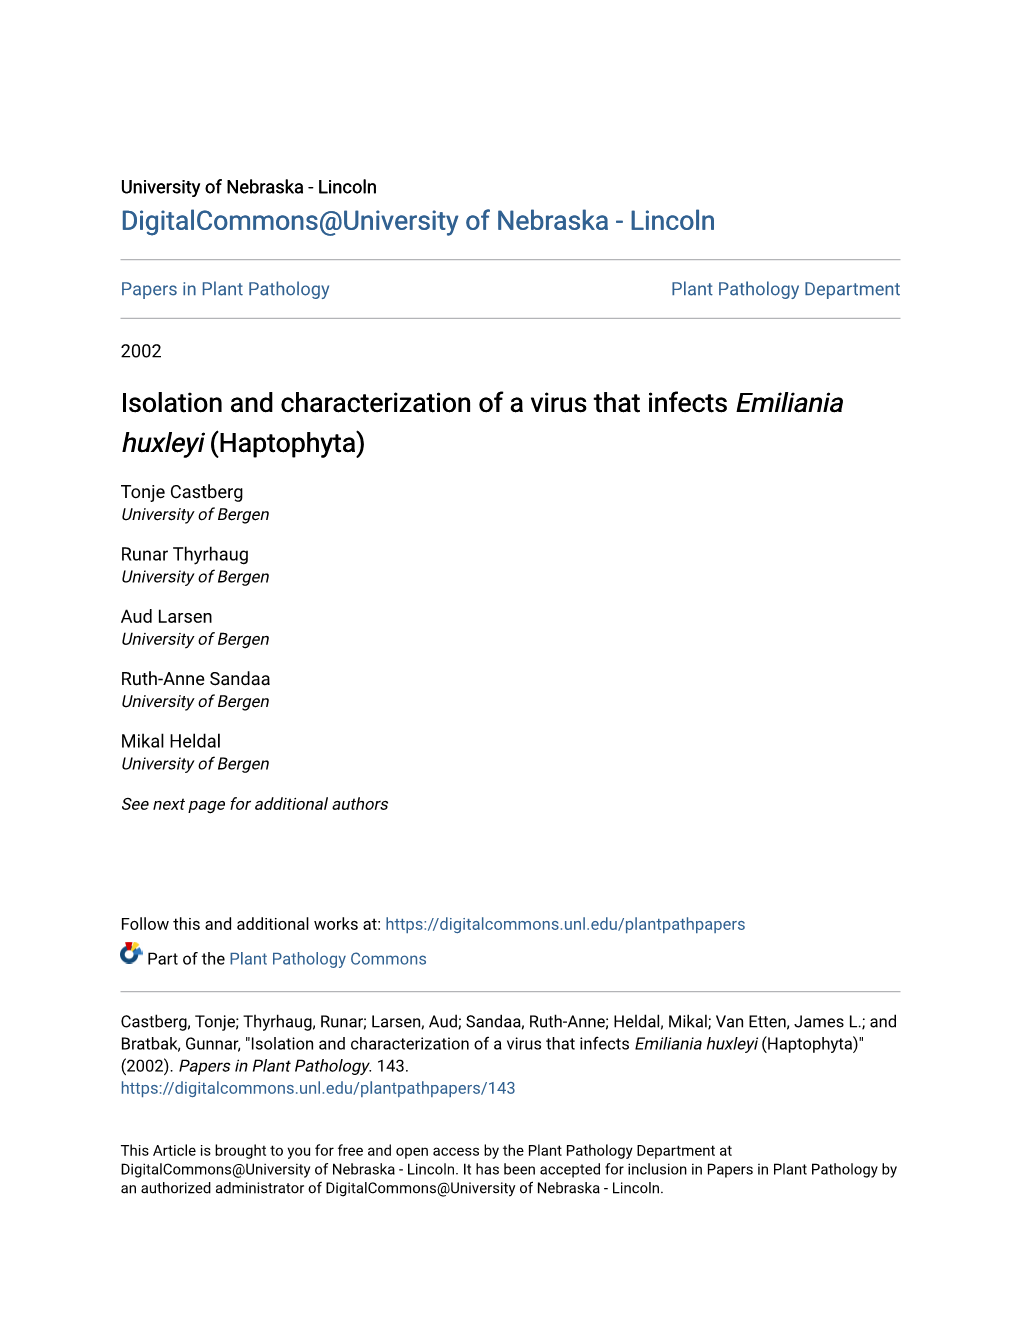 Isolation and Characterization of a Virus That Infects Emiliania Huxleyi (Haptophyta)